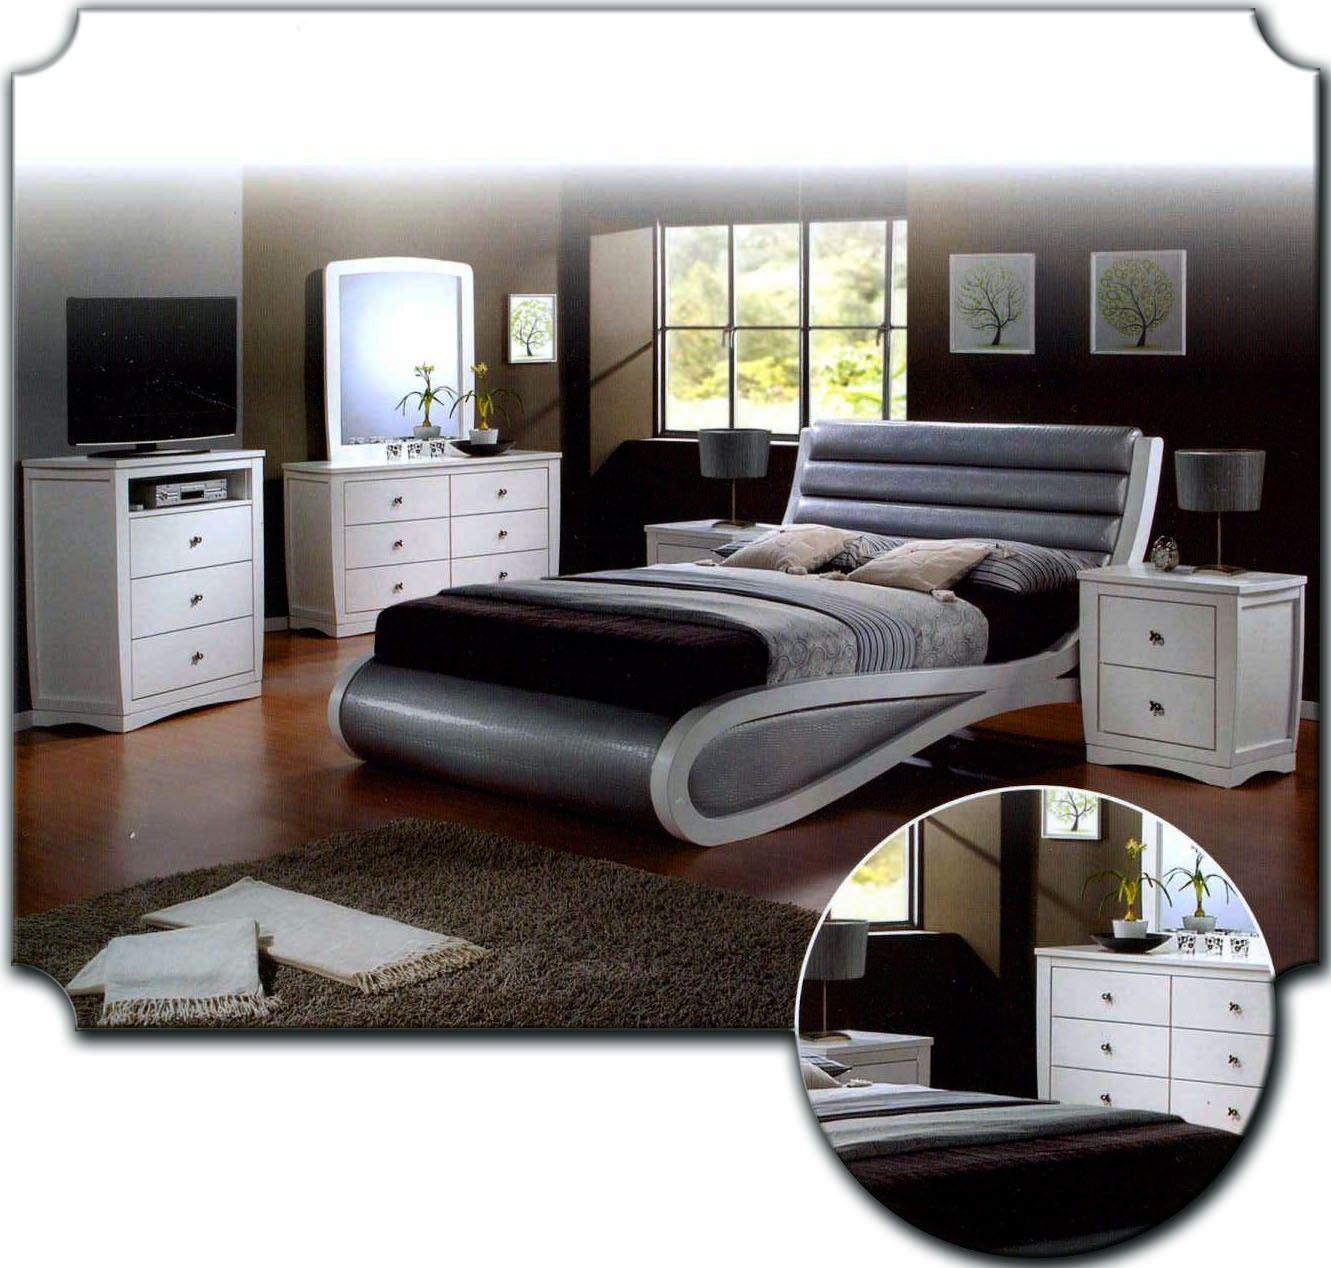 Teen Boy Bedroom Furniture
 Bedroom Ideas For Teenage Guys Teen Platform Bedroom Sets